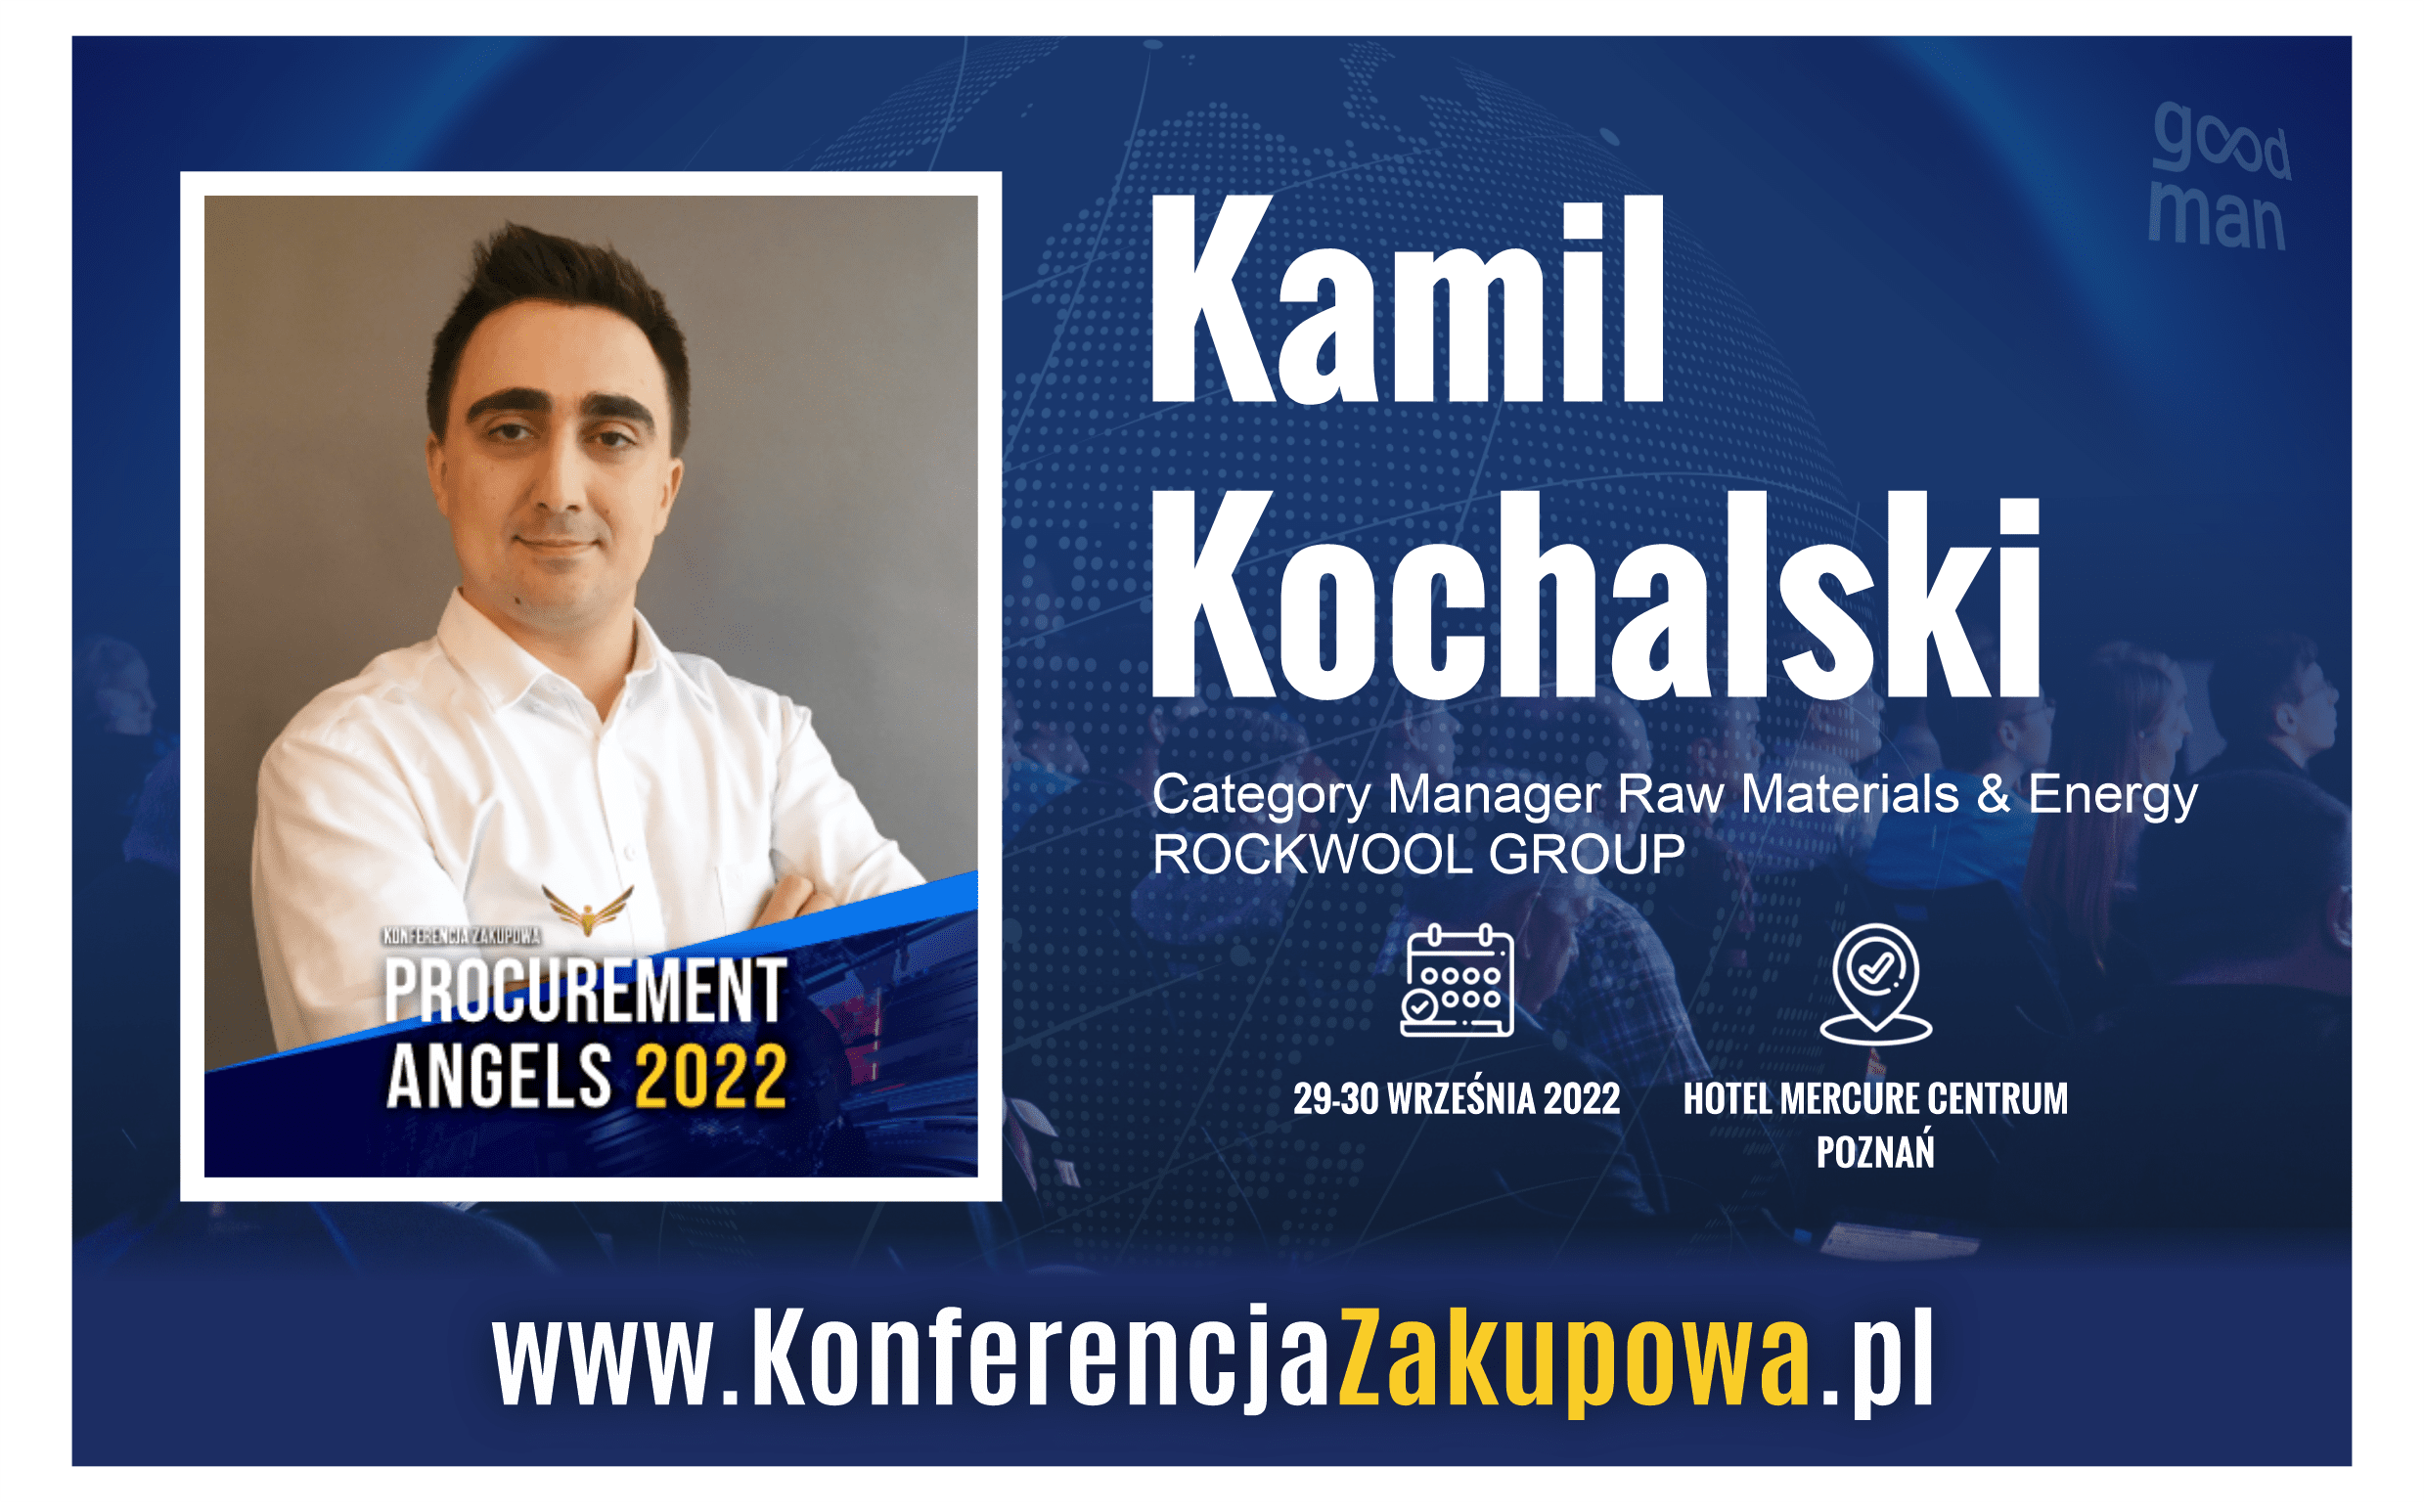 kamil kochalski konferencja zakupowa procurment conference poland 2022